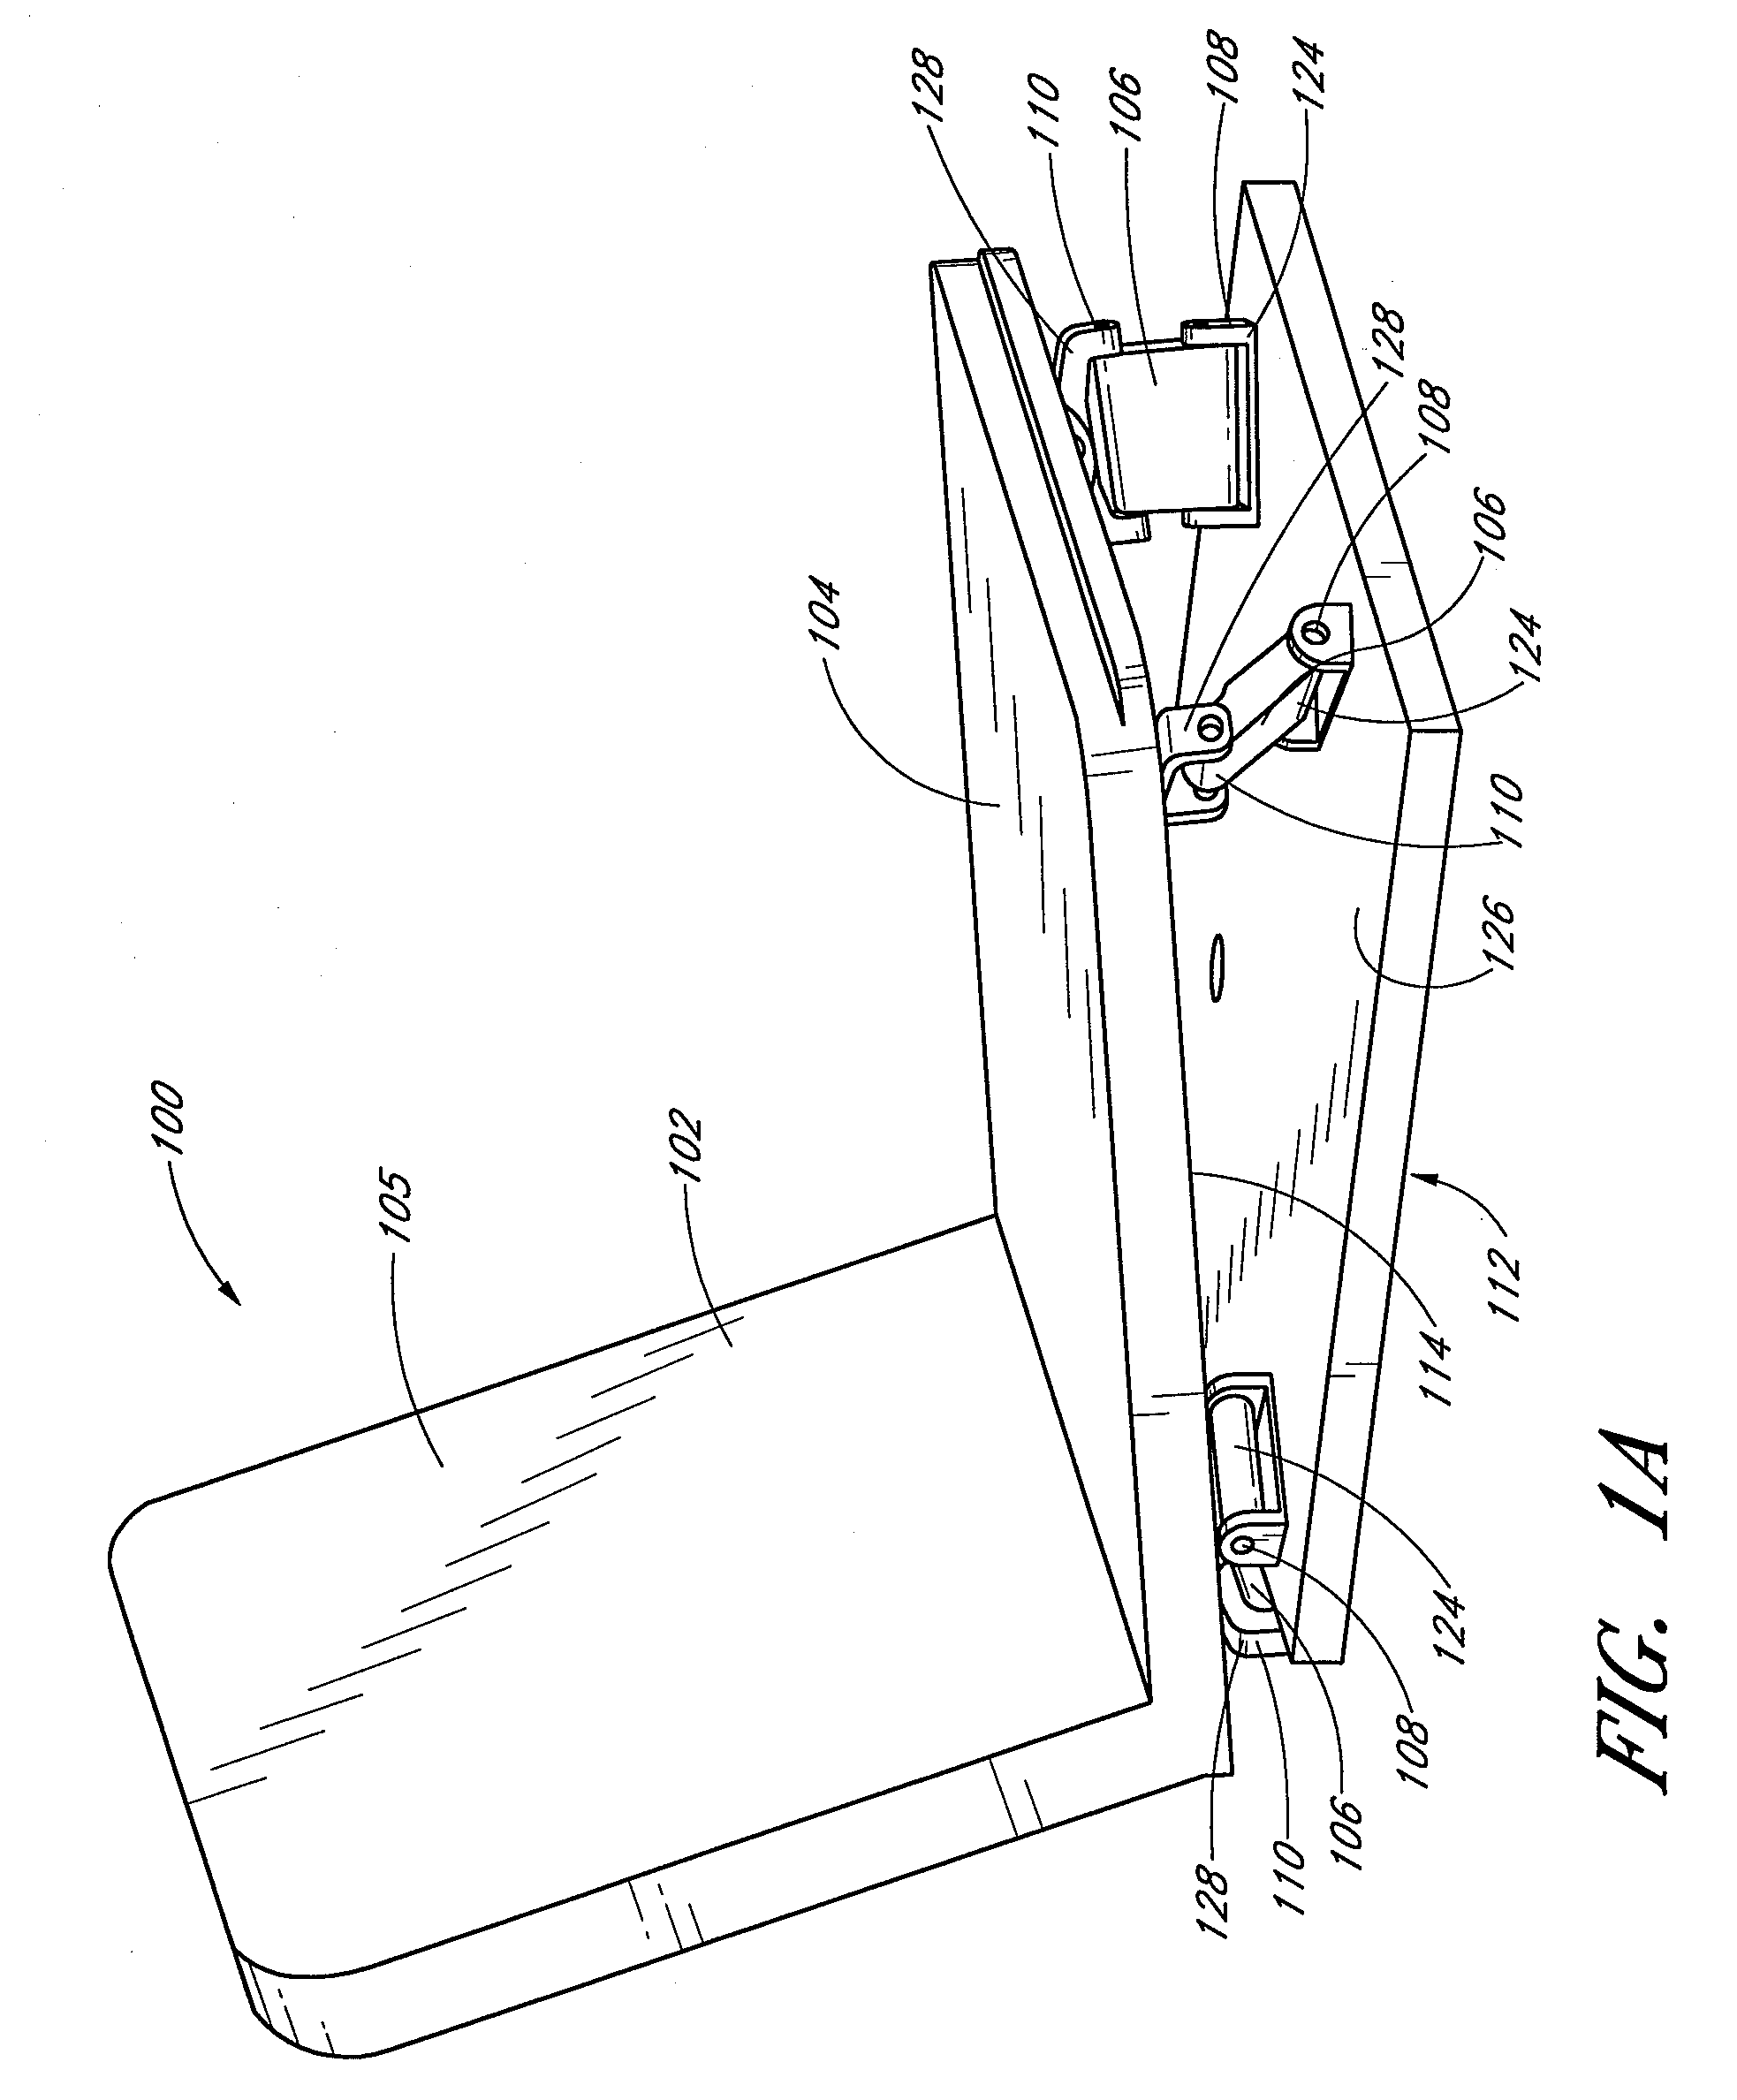 Vehicle seat assembly